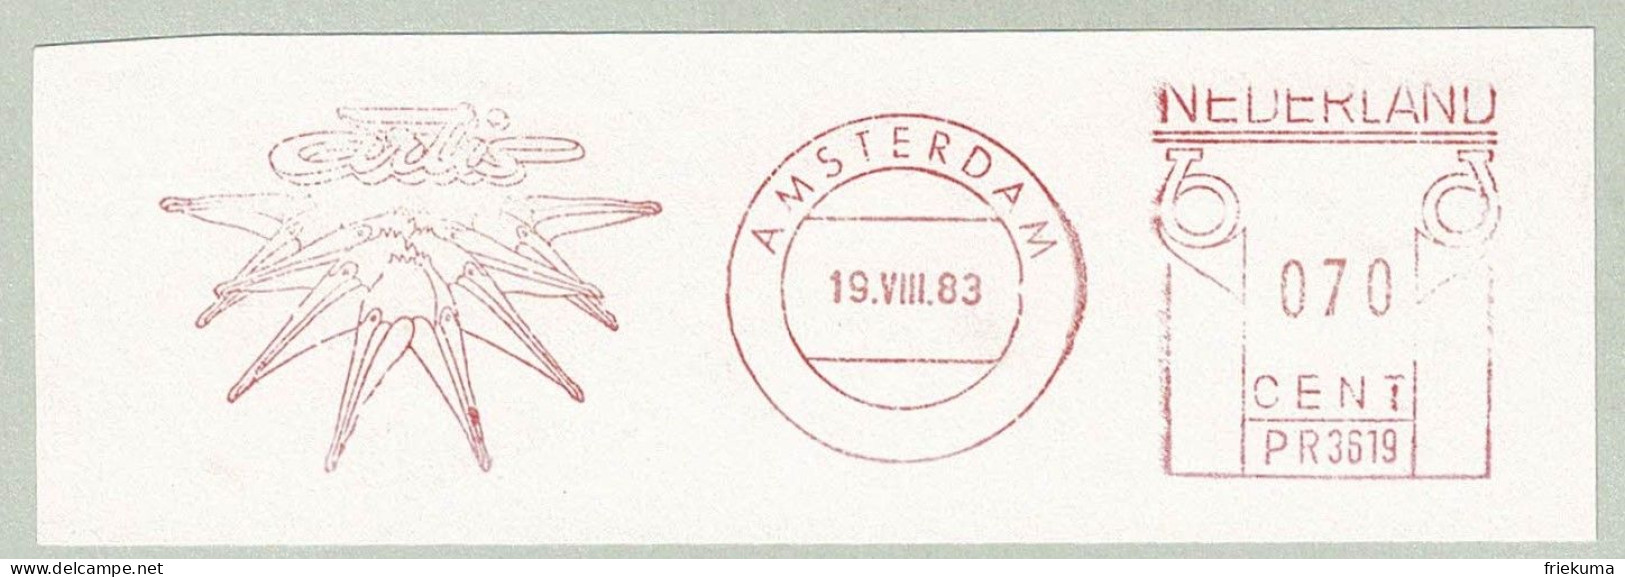 Niederlande / Nederland 1983, Freistempel / EMA / Meterstamp Amsterdam, Pelikane / Pelicans / Pelecanus - Pellicani